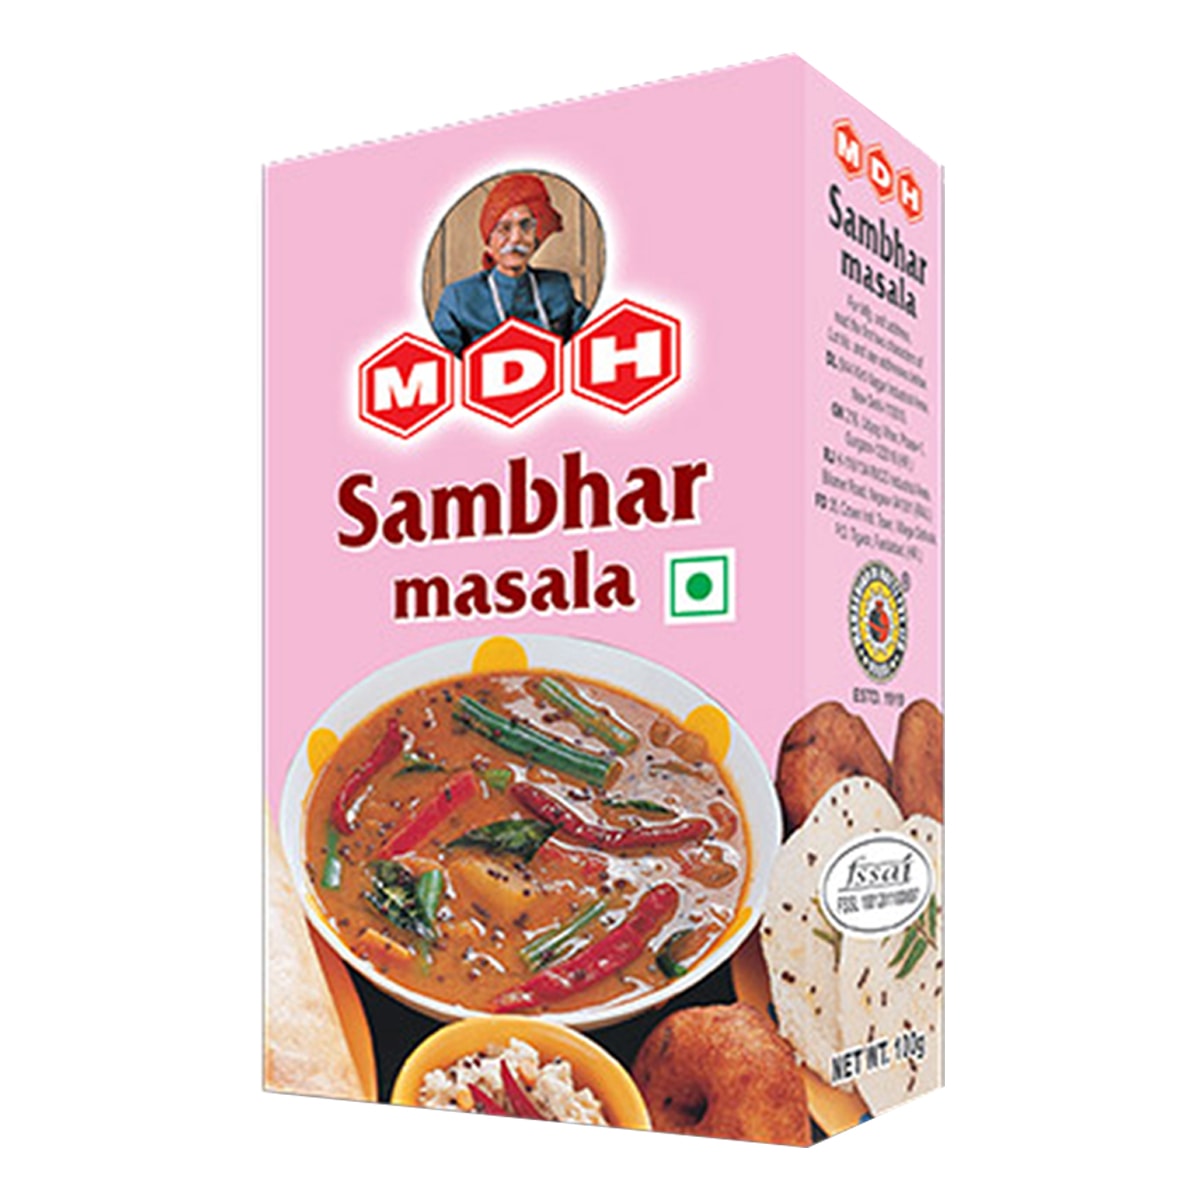 Buy MDH Sambhar Masala - 100 gm